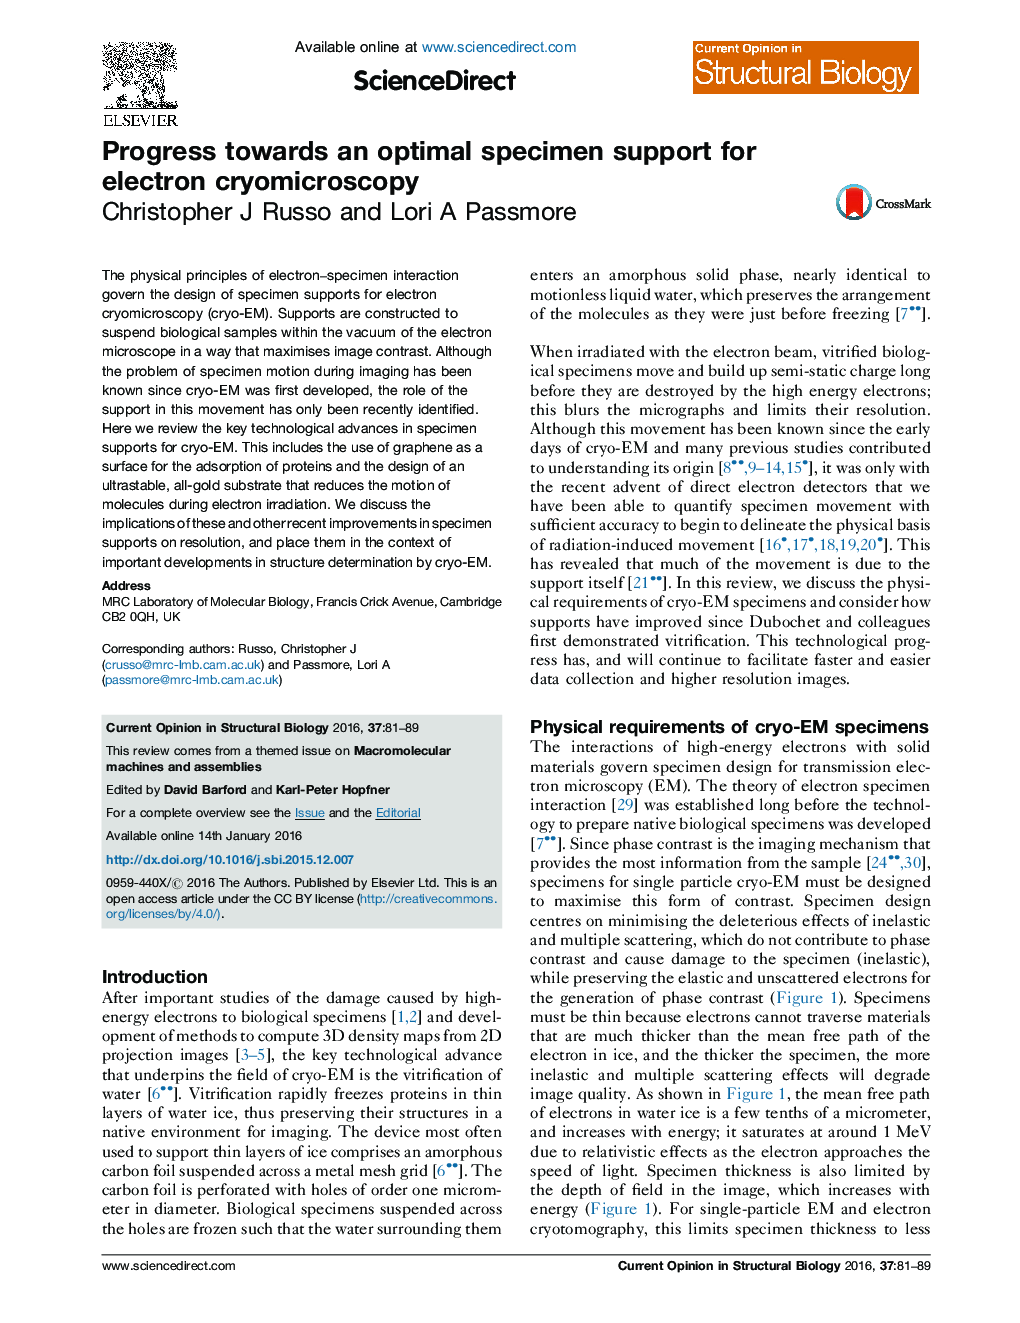 Progress towards an optimal specimen support for electron cryomicroscopy